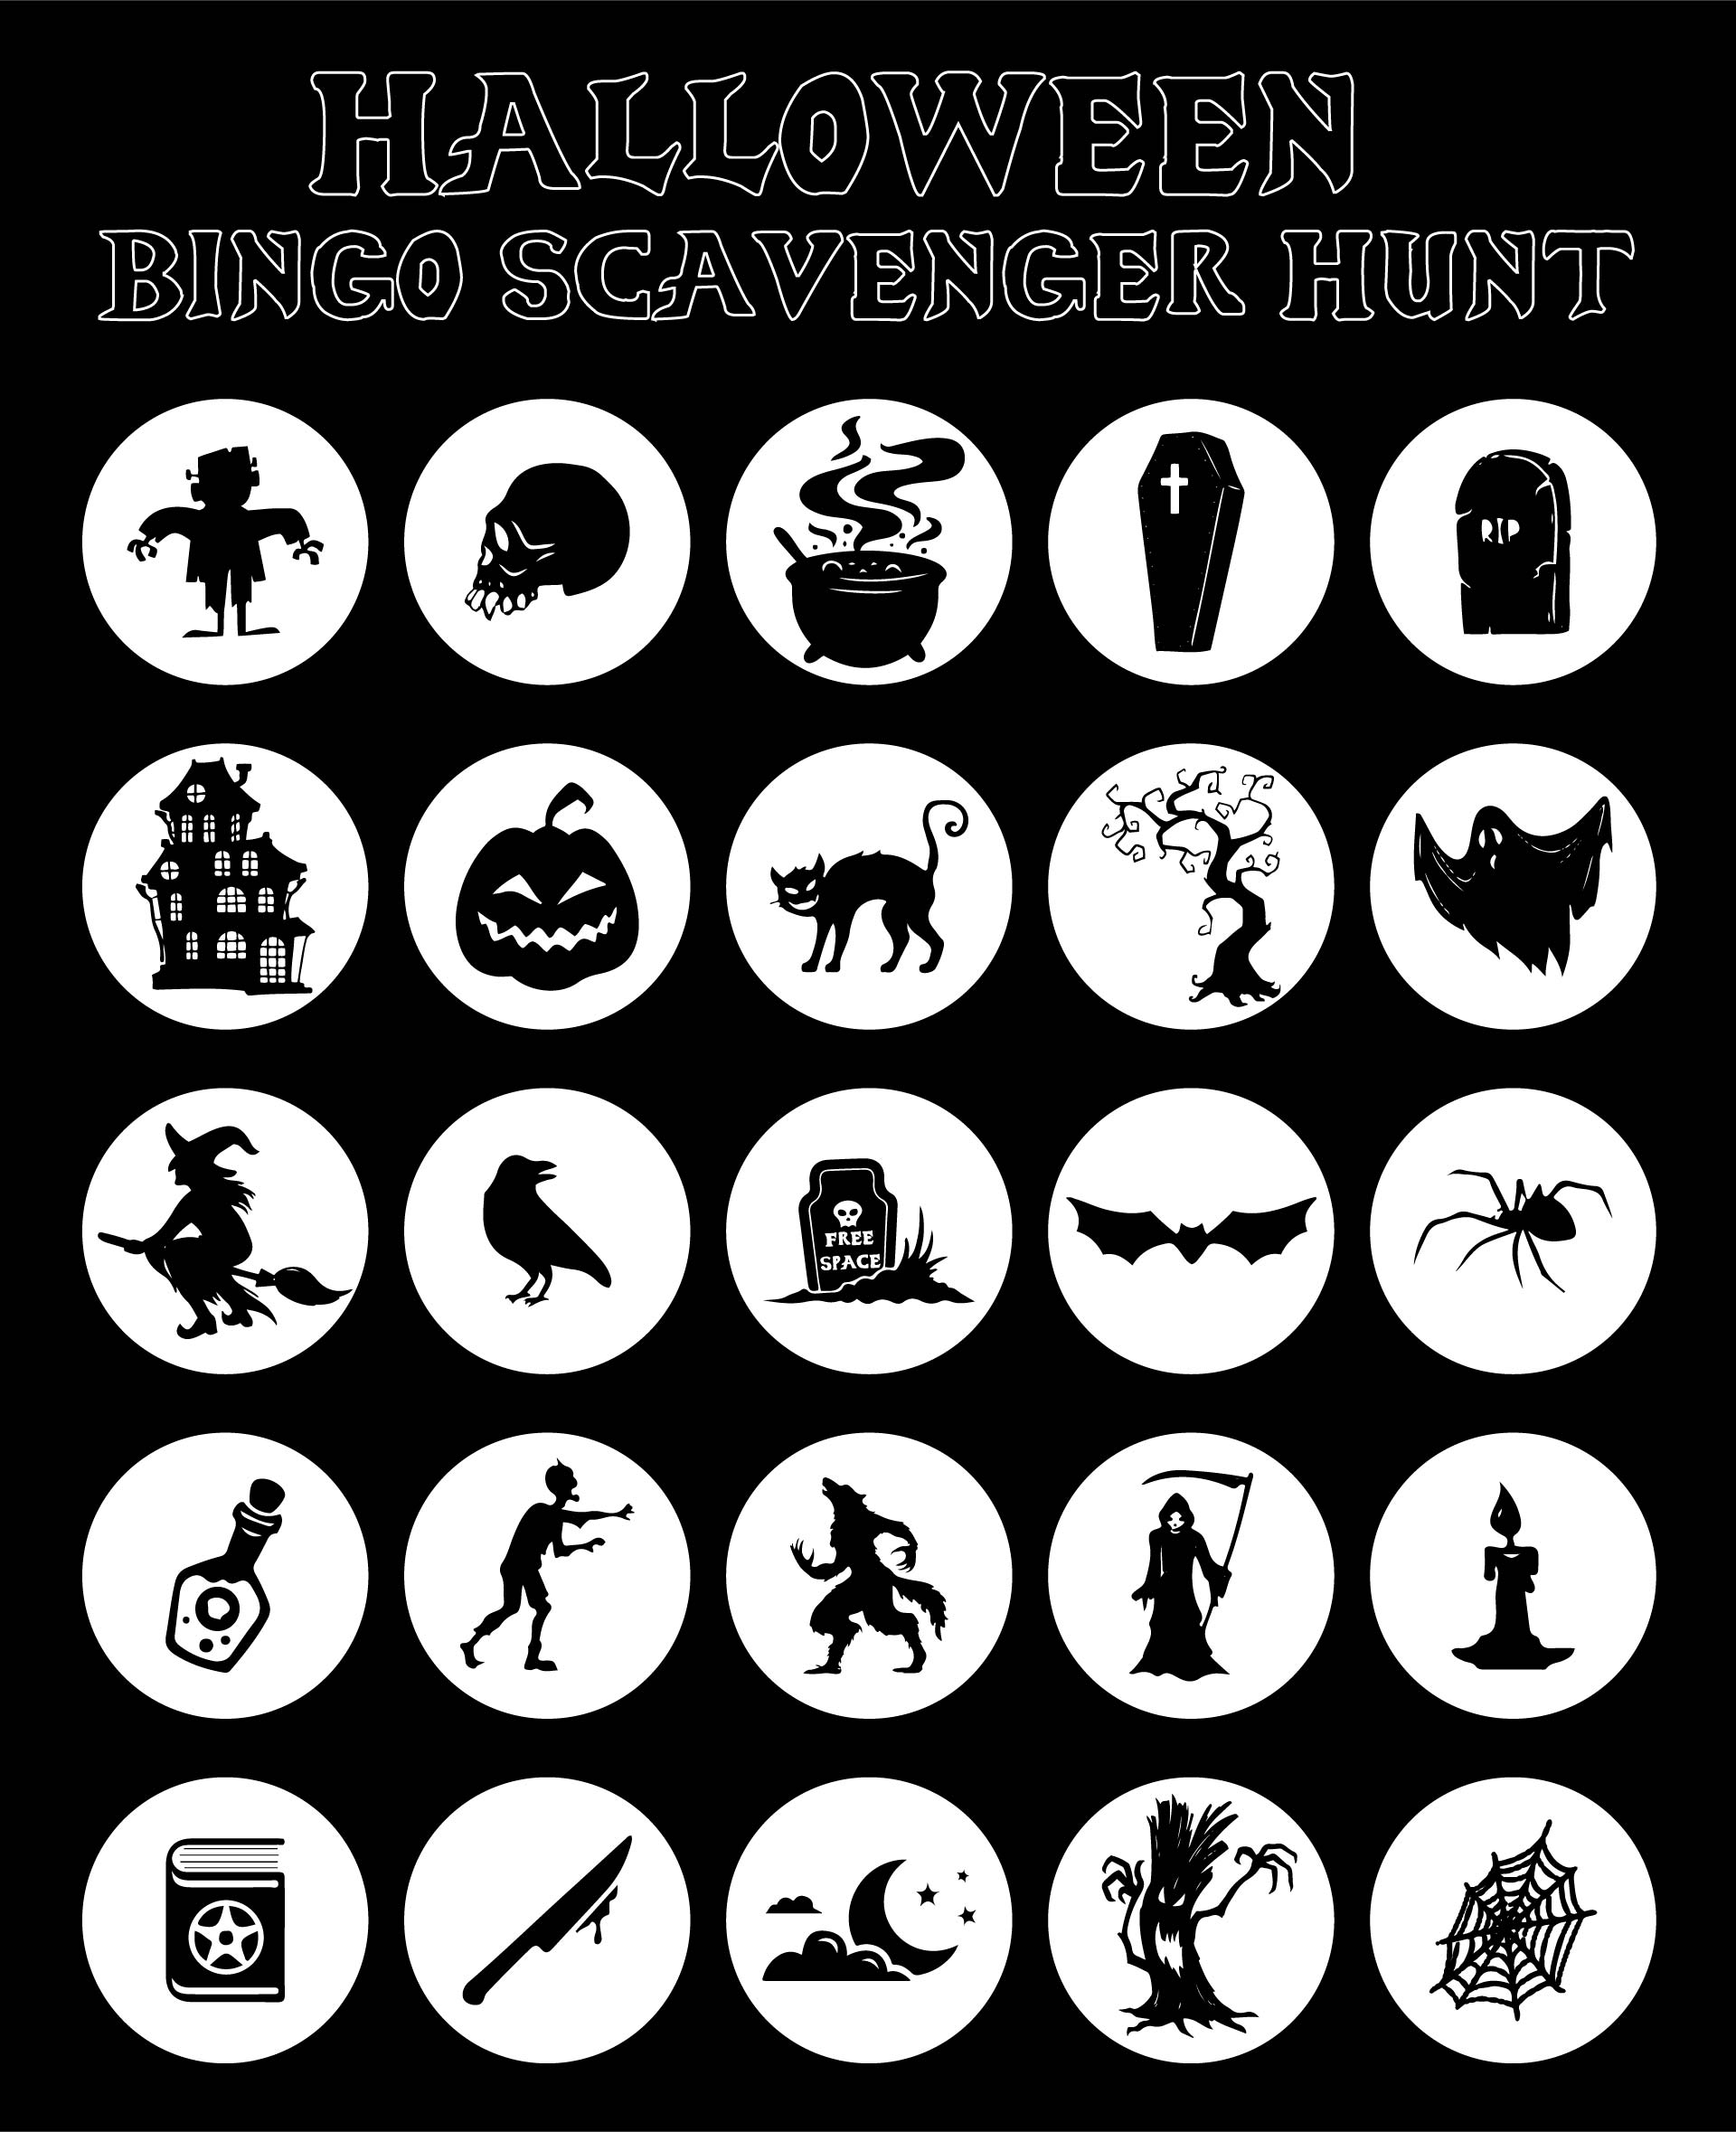 Halloween Bingo Game Scavenger Hunt Printable Cards